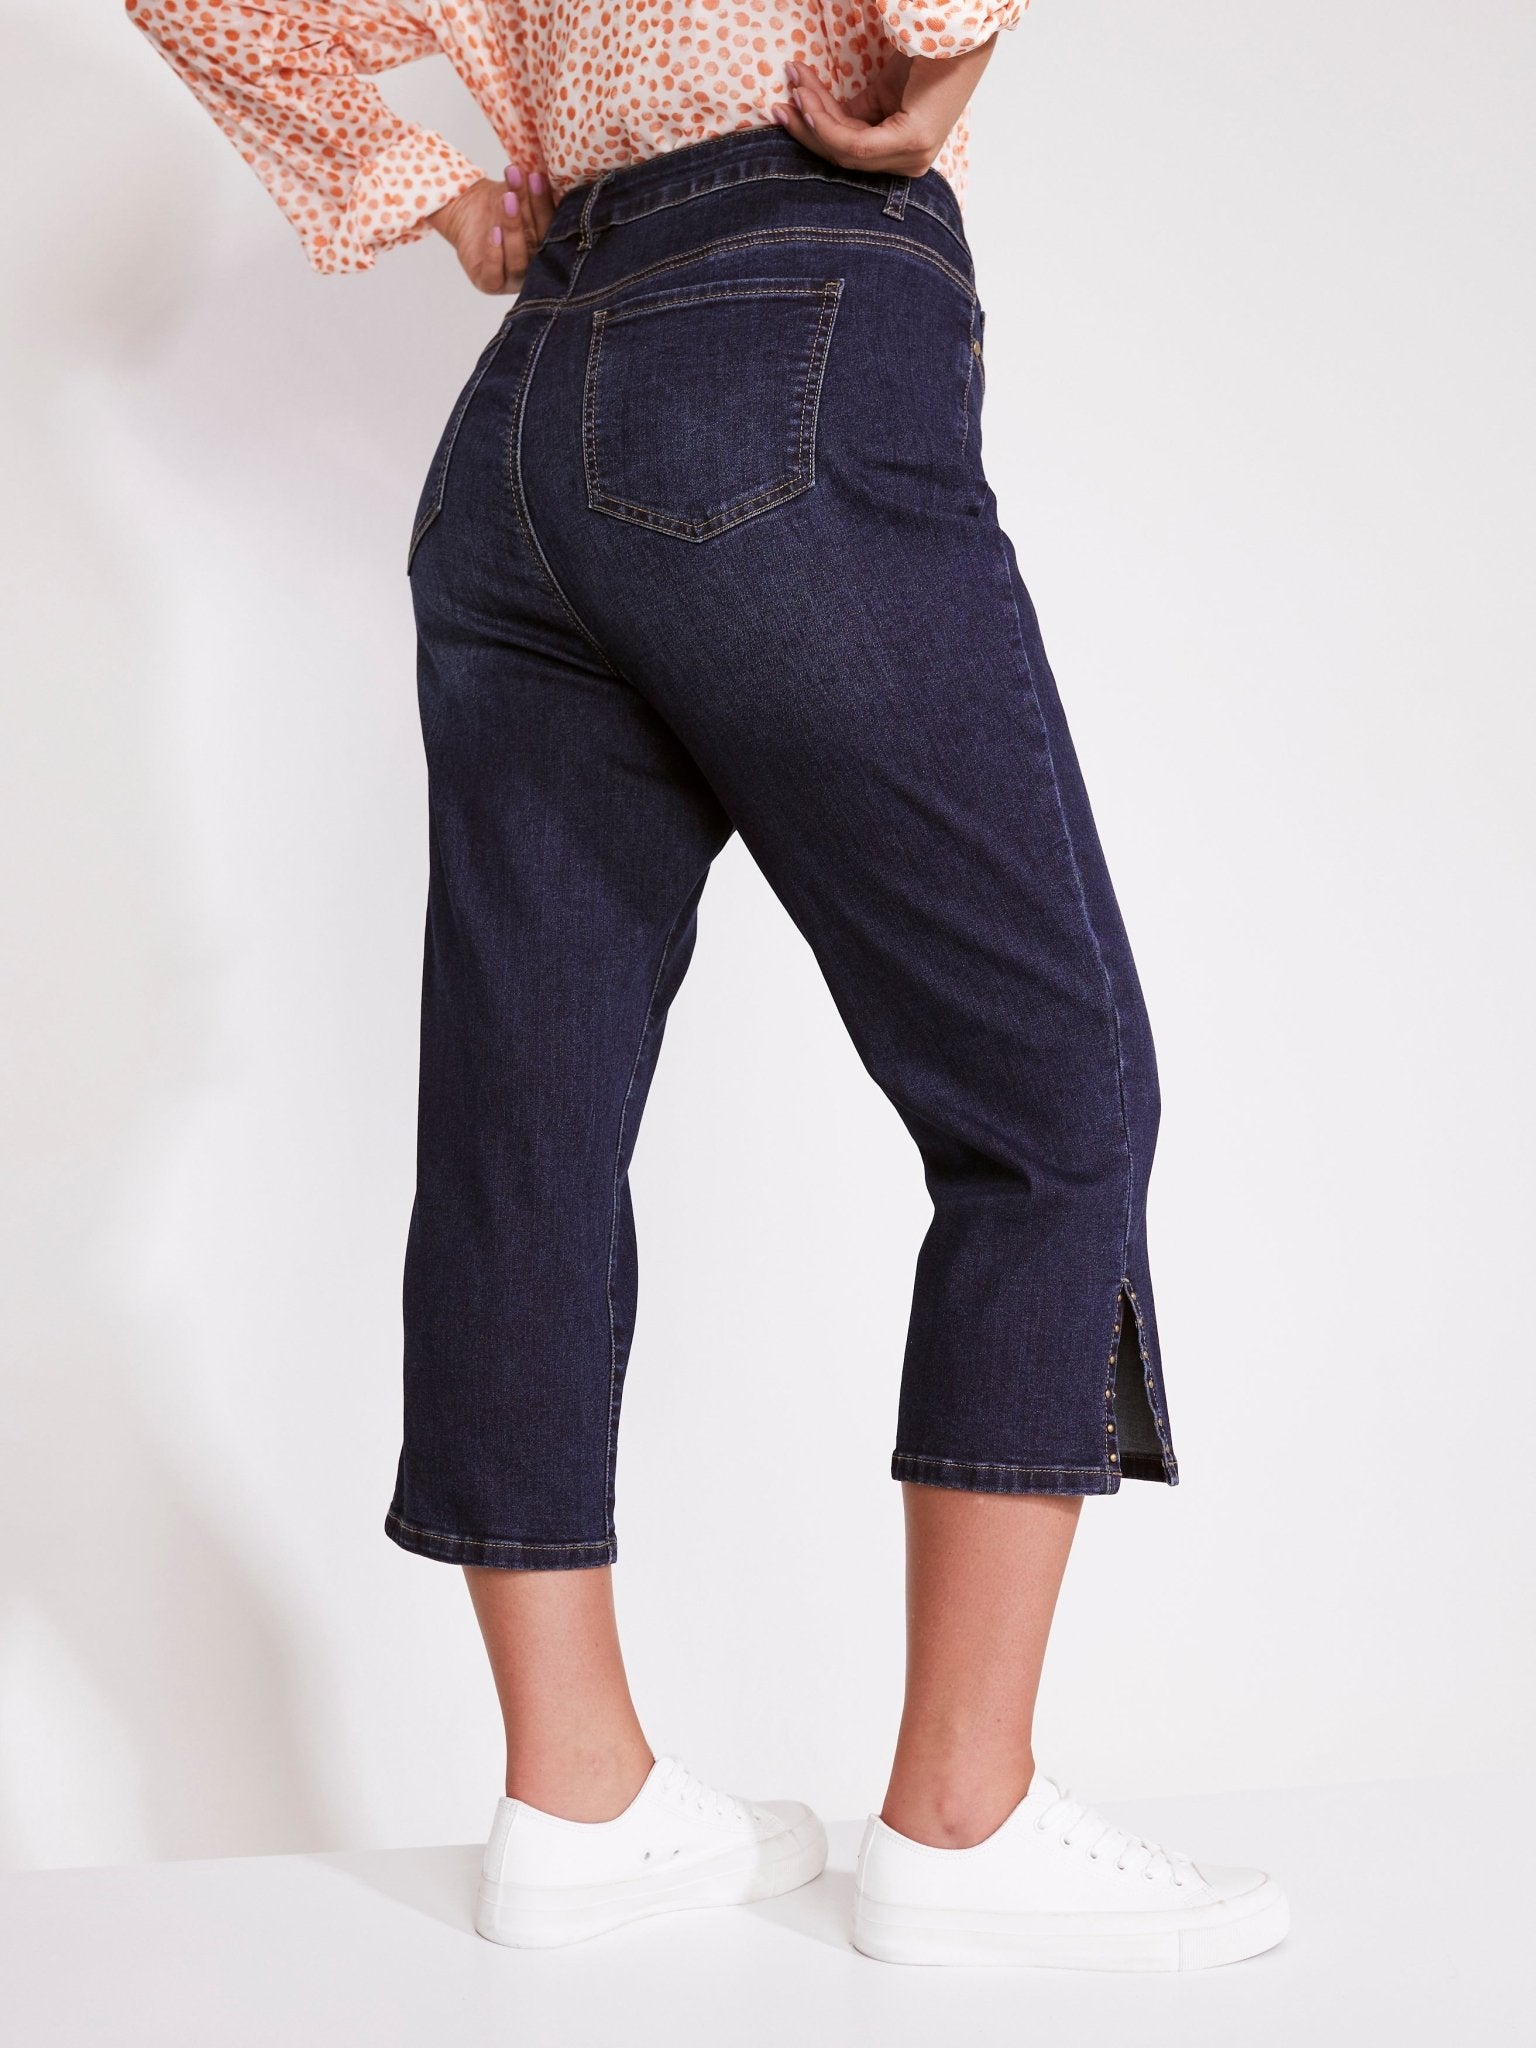 Westport Signature Capri Pants with Stud Detail - Plus - DressbarnClothing